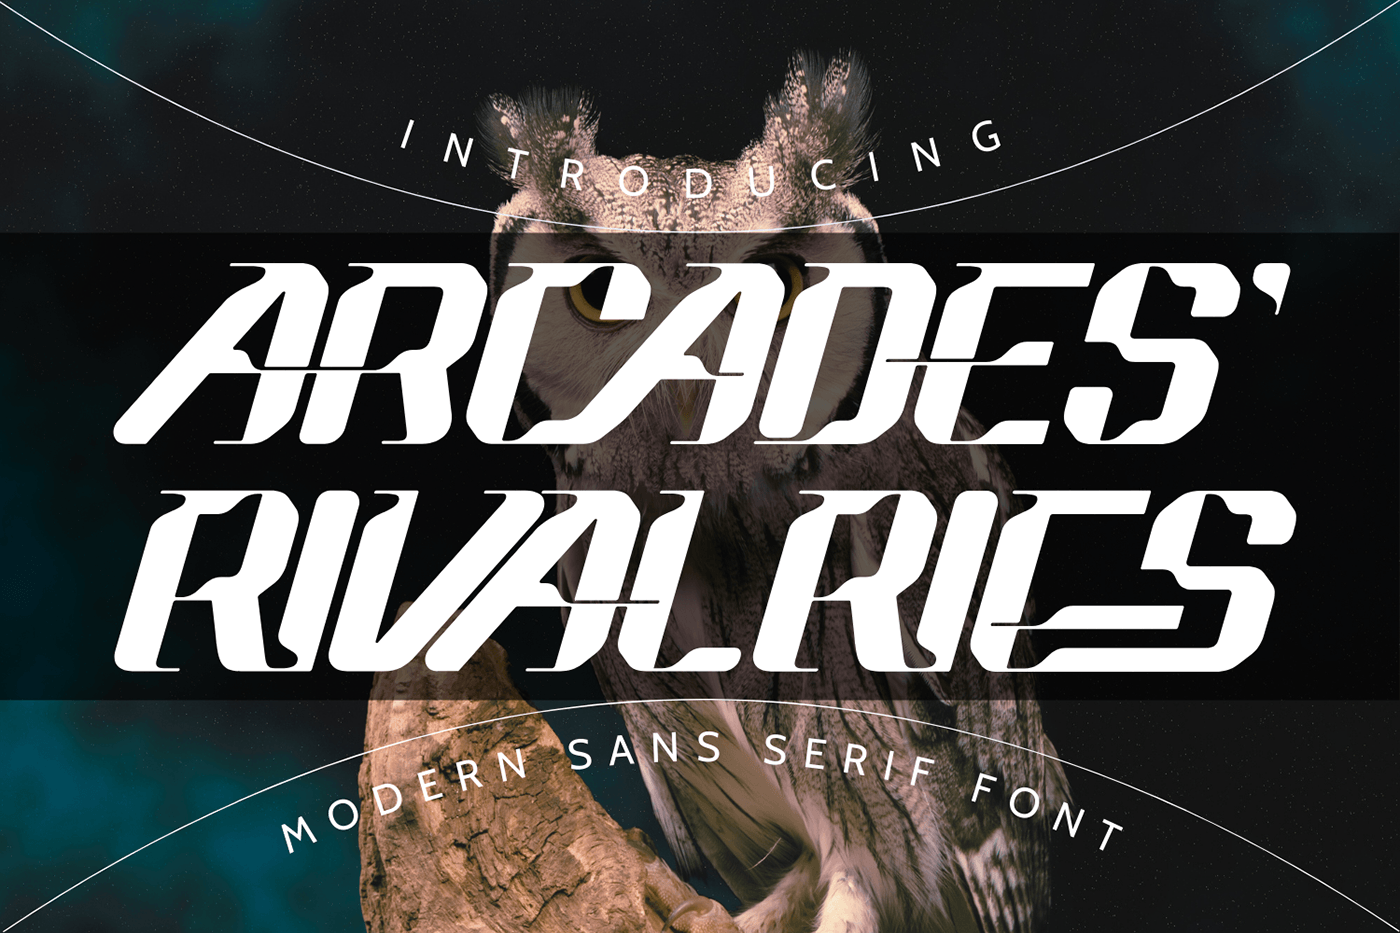 futuristic font sci-fi font ARCADES' RIVALRIES ARCADES' RIVALRIES Font Futuristic ligatures futuristic sci-fi